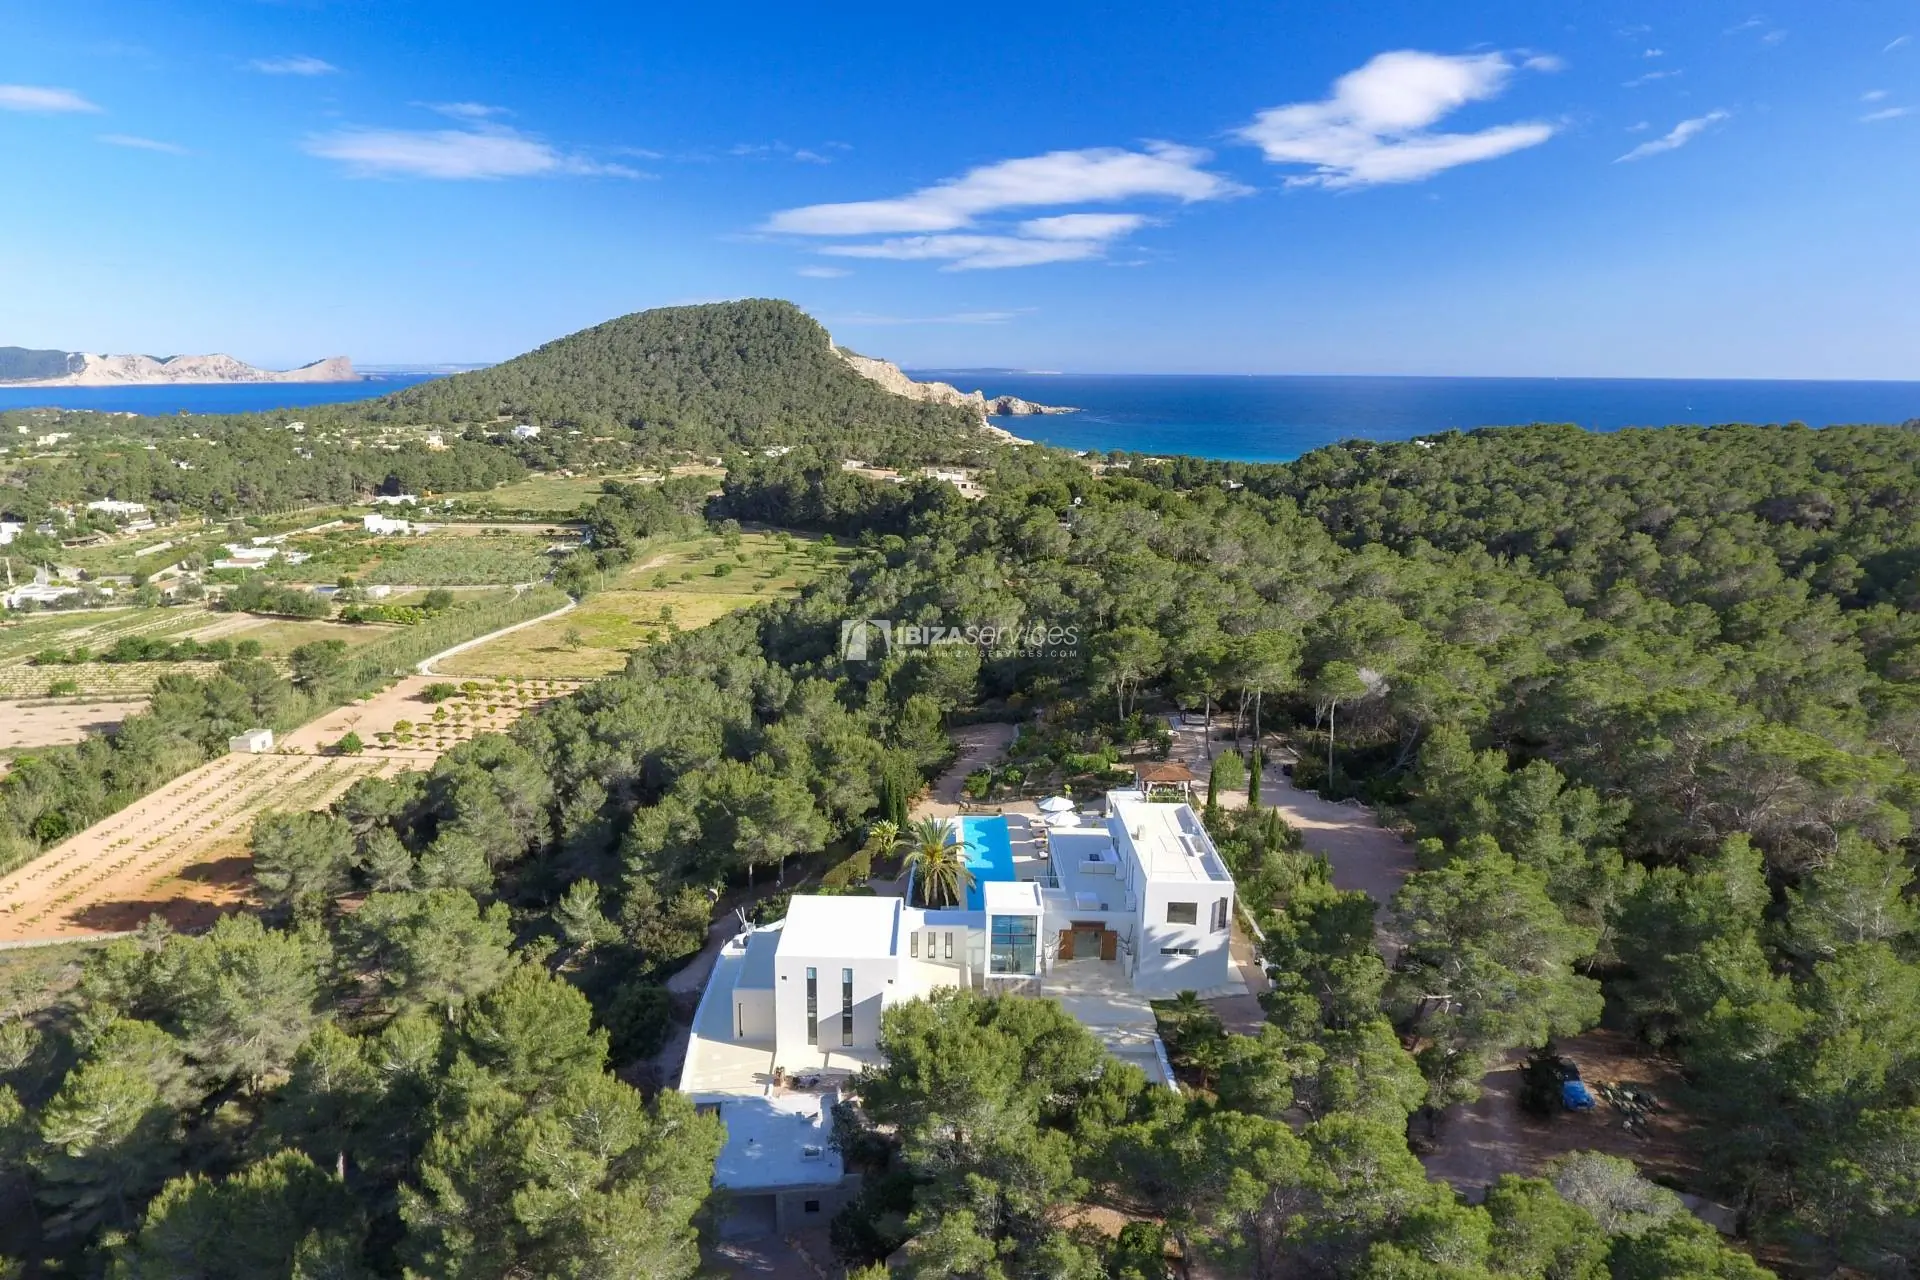 Luxury 6 bedroom holiday villa Cala Jondal close to Blue Marlin